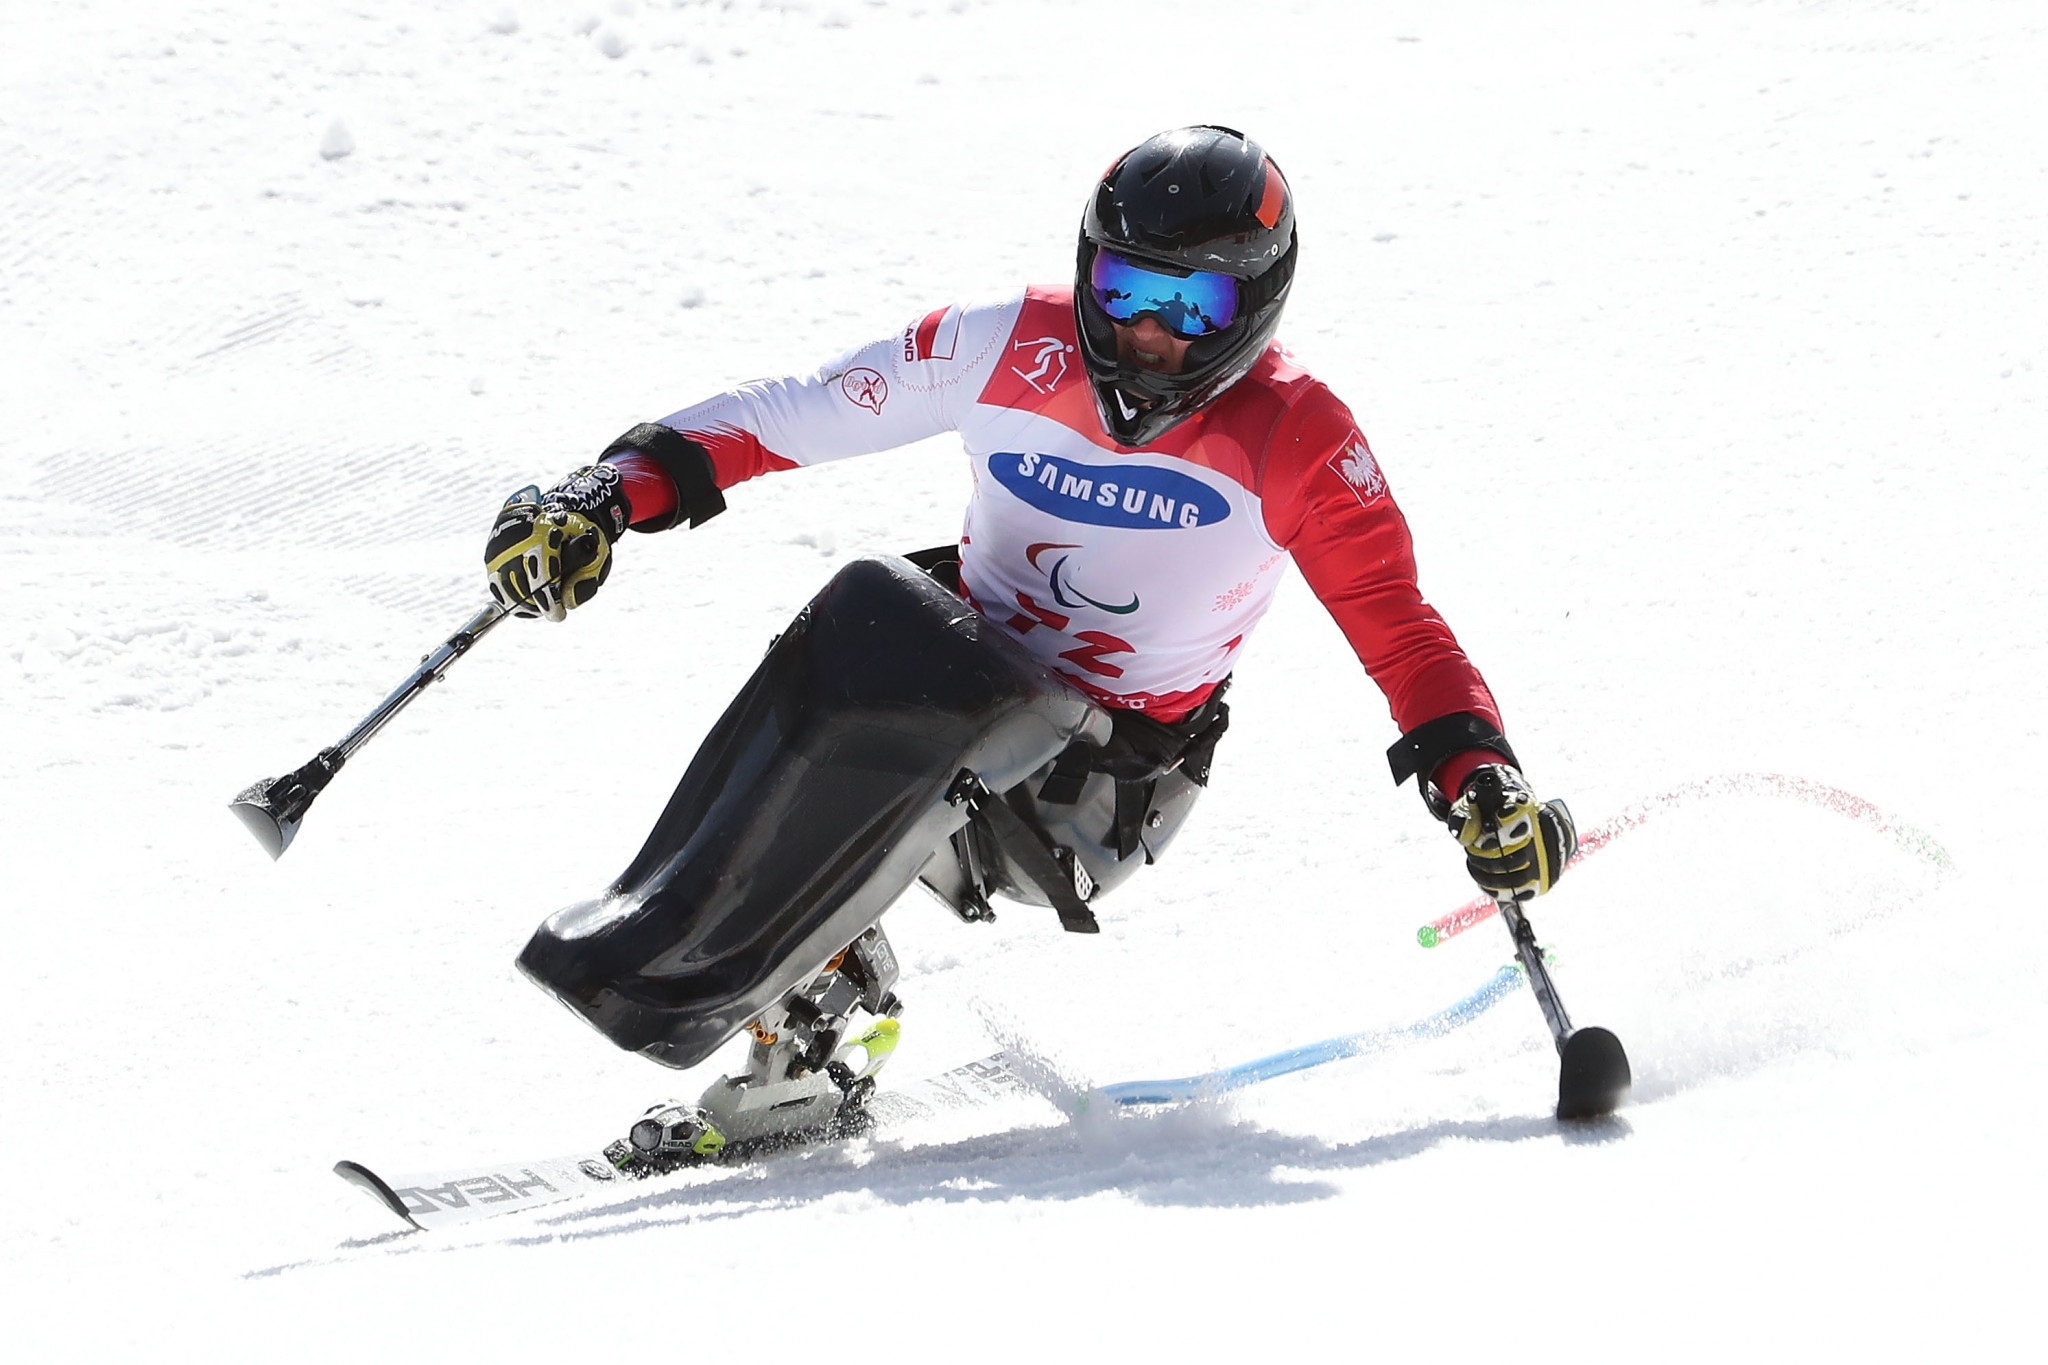 Sikorski skis to victory at World Para Alpine Skiing World Cup